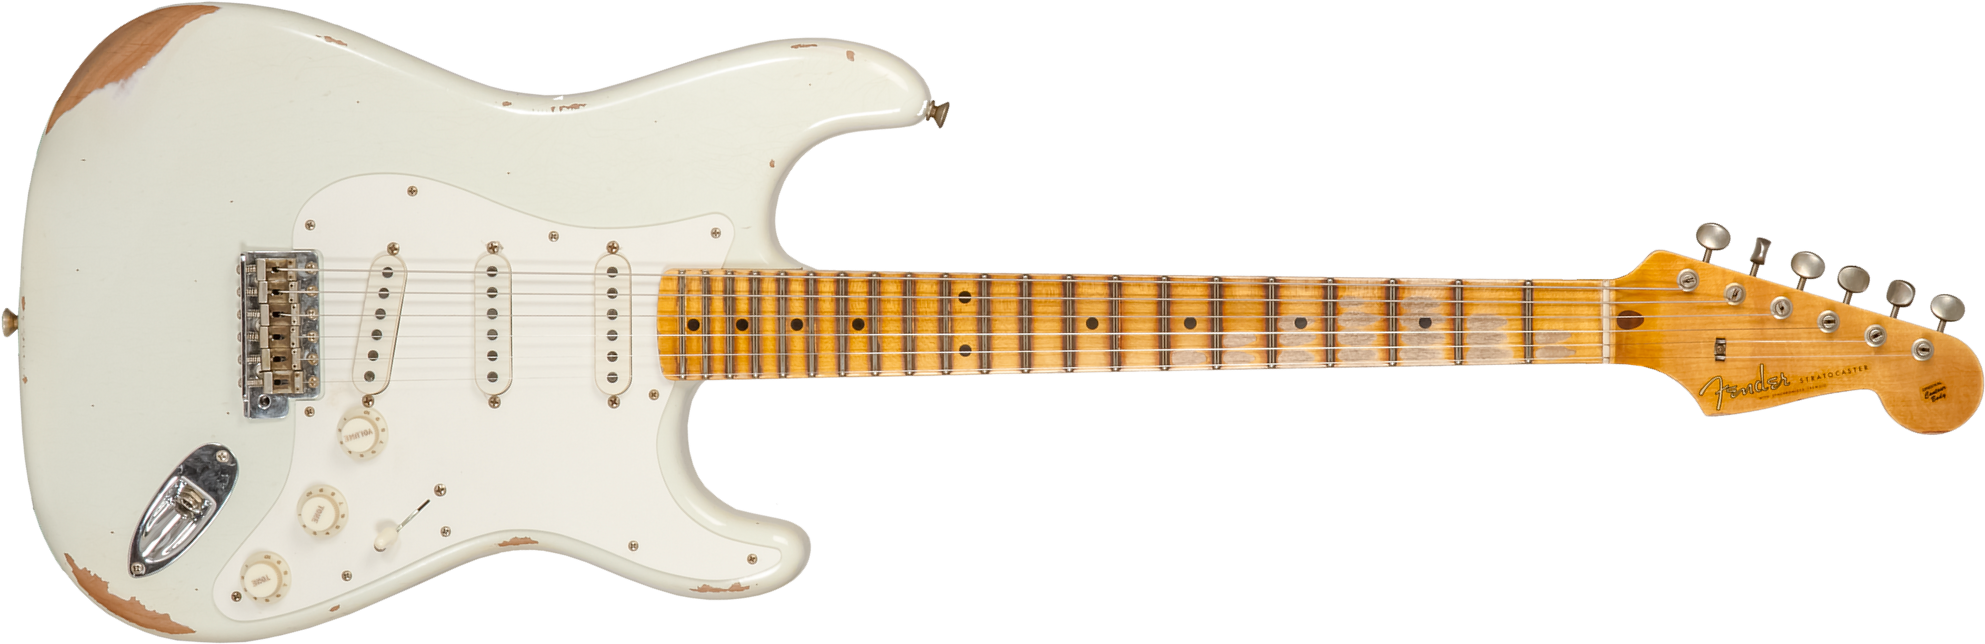 Fender Custom Shop Strat Fat 50's 3s Trem Mn #cz570495 - Relic India Ivory - Str shape electric guitar - Main picture